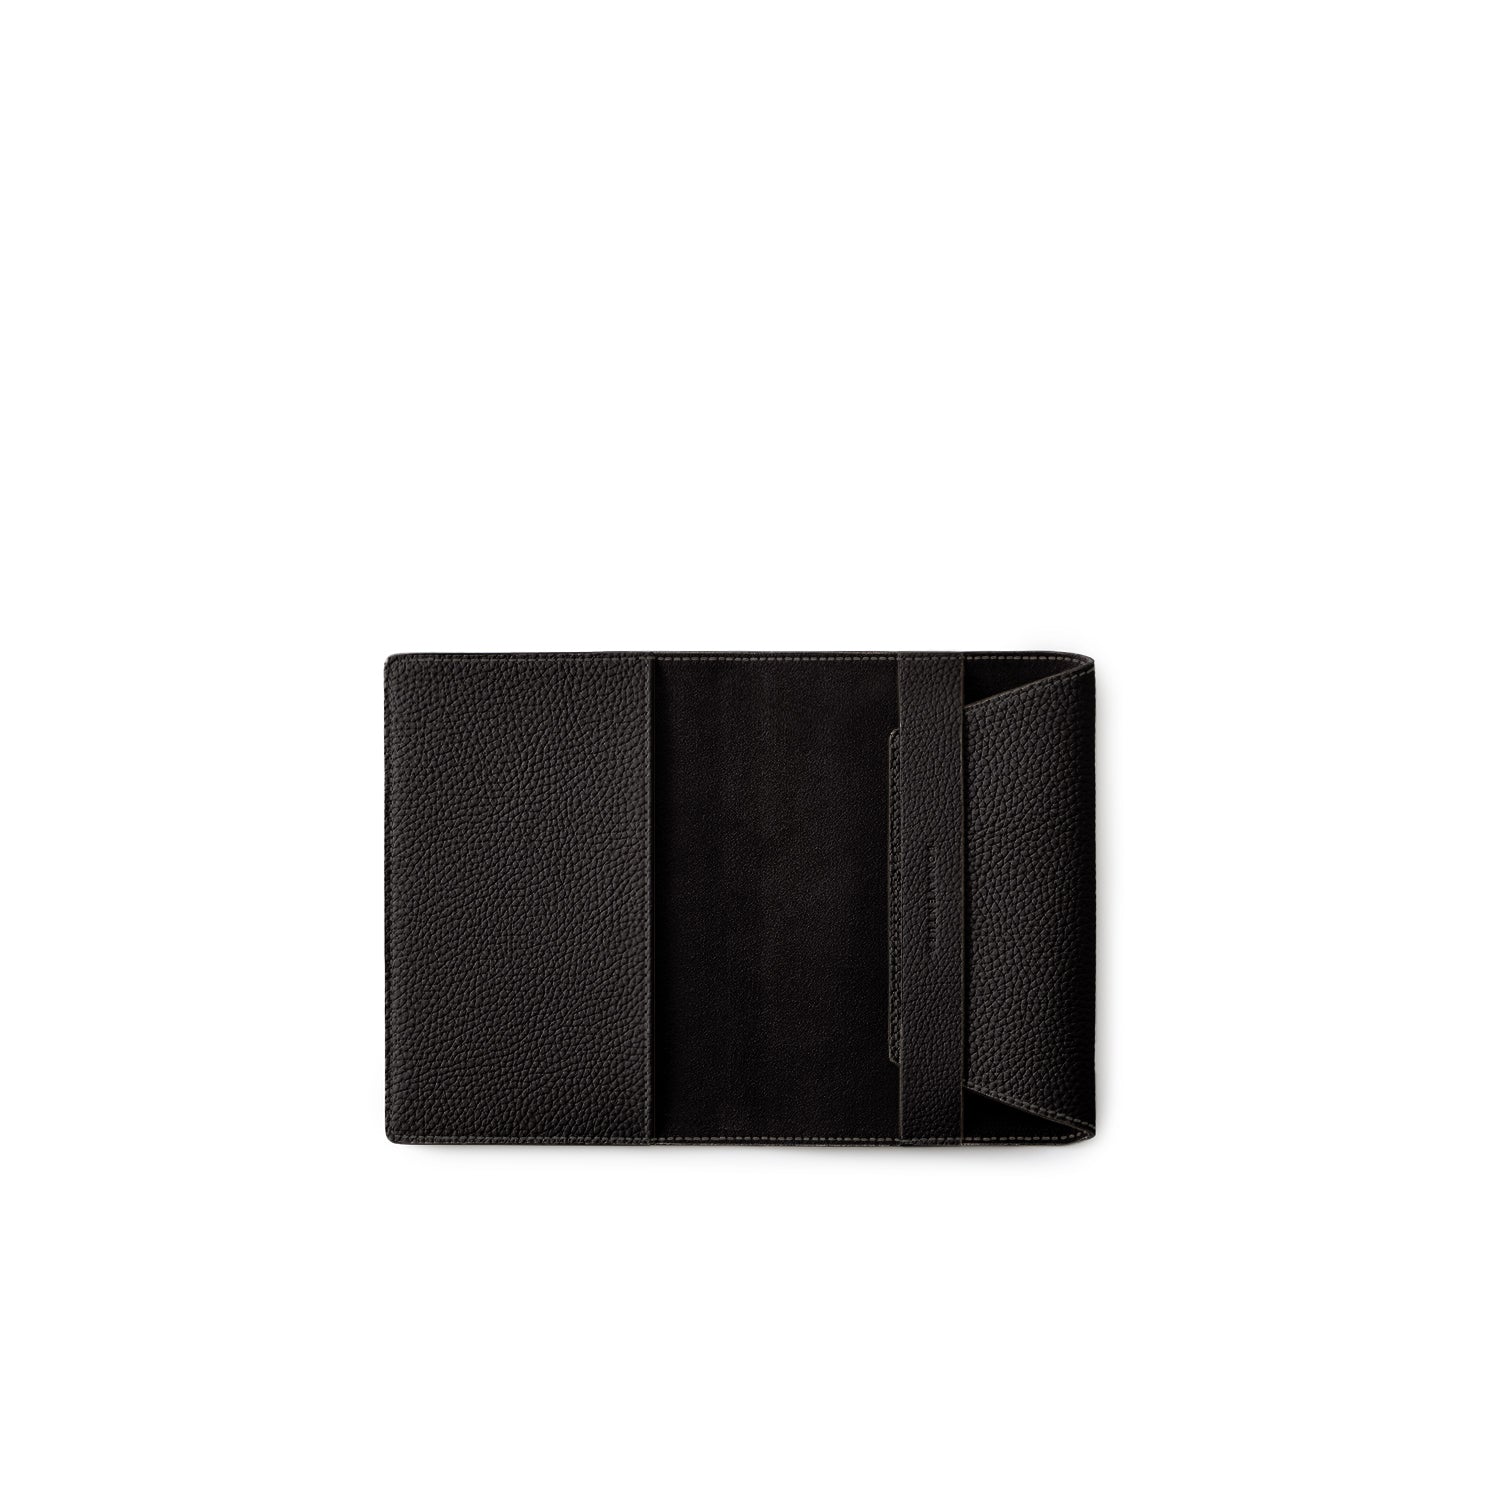 Adjustable book cover, paperback size (A6), shrink leather